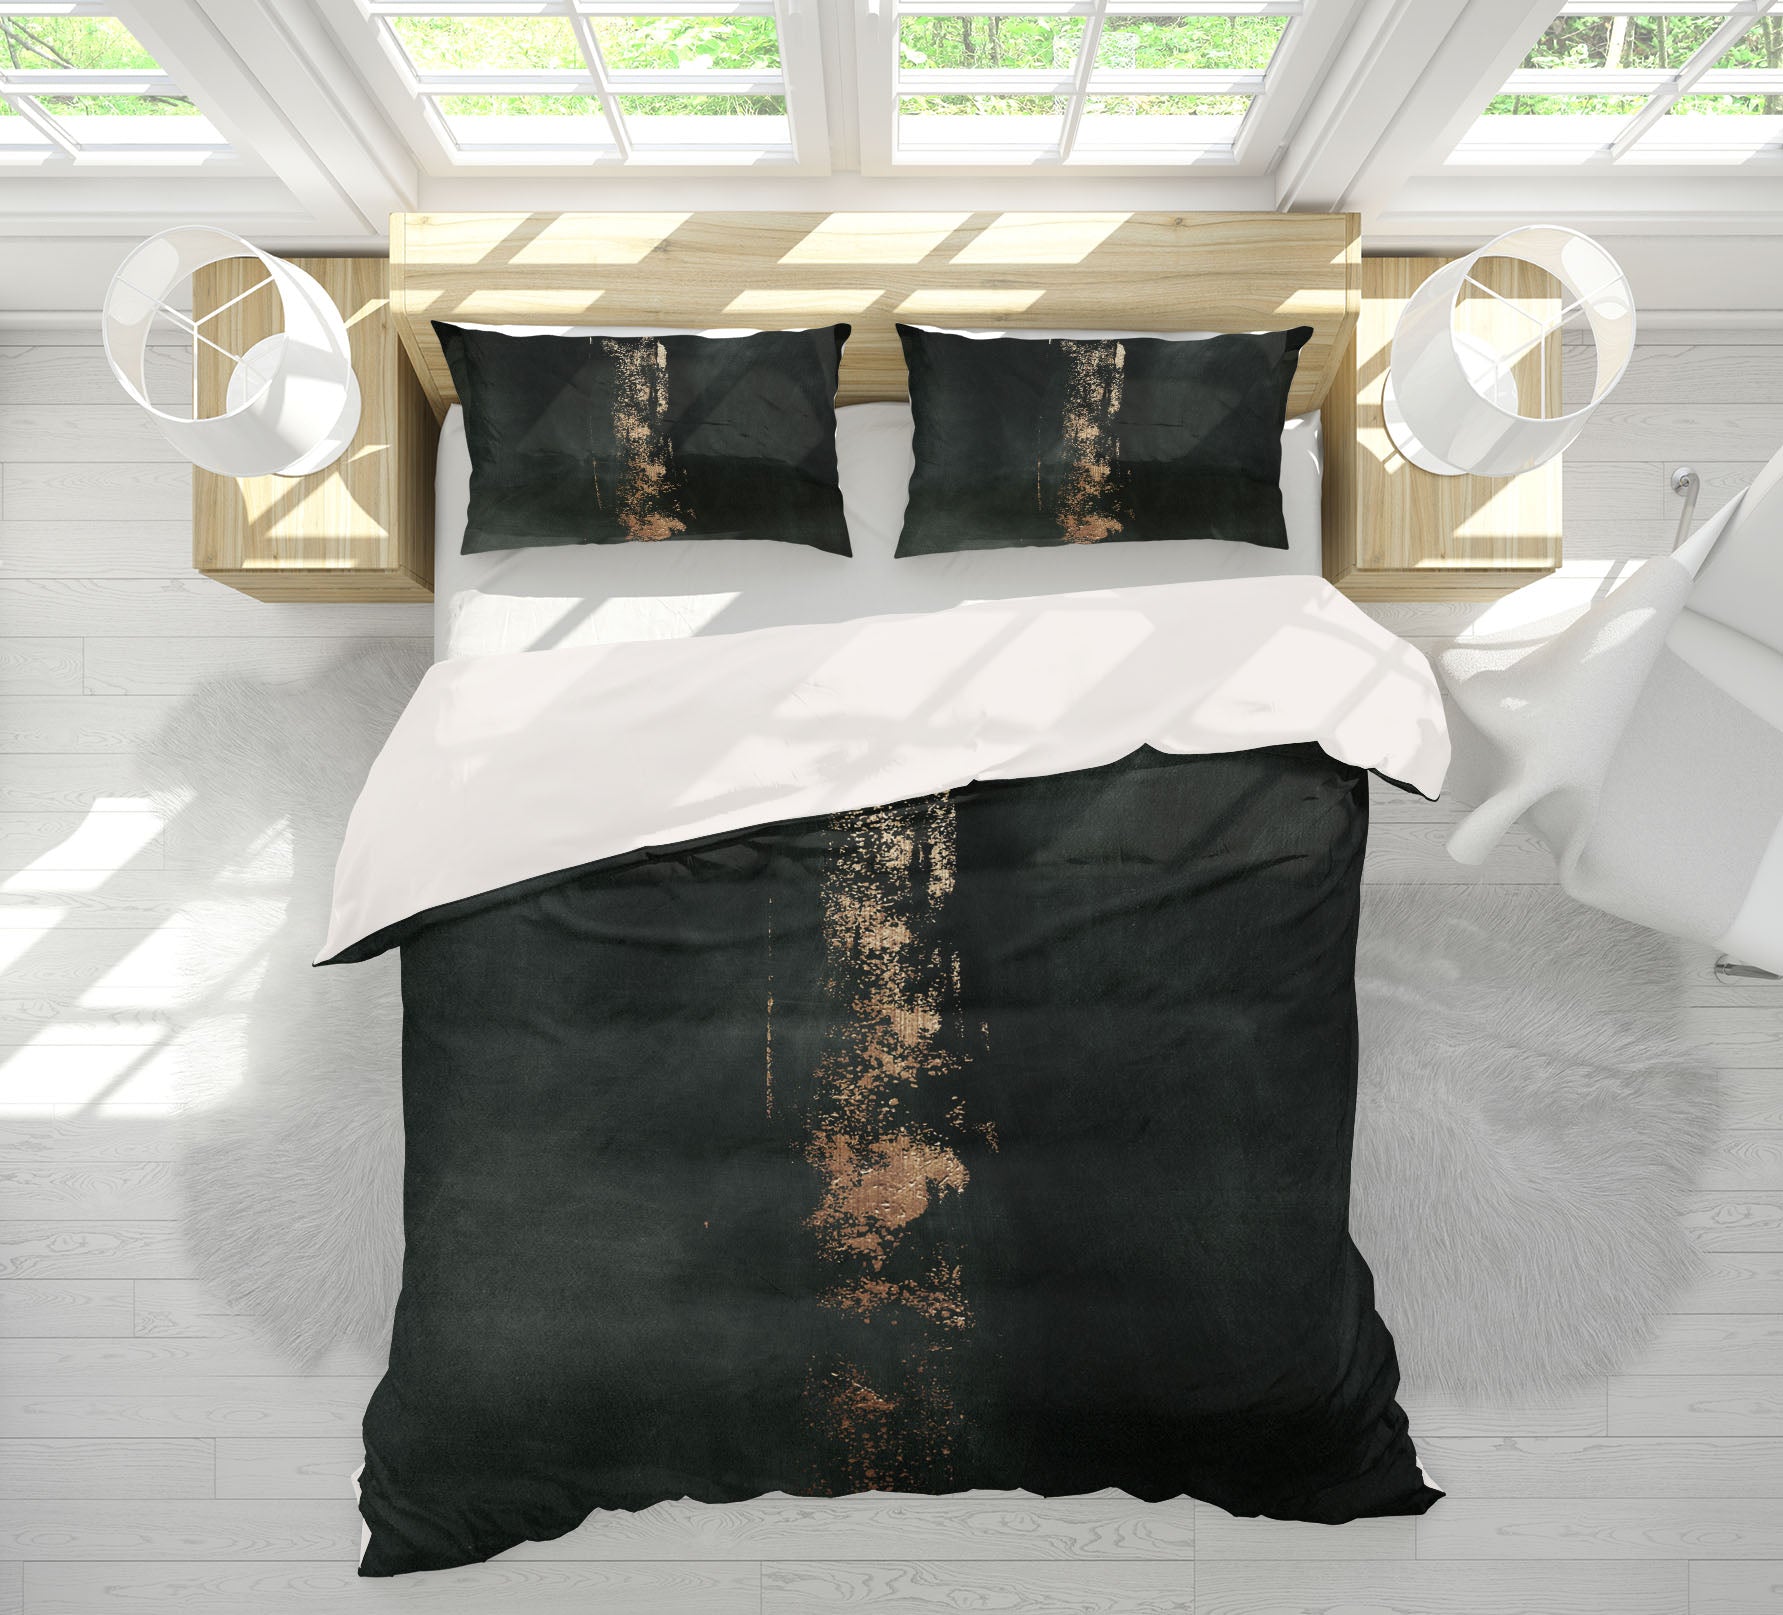 3D Fata Morgana 143 Boris Draschoff Bedding Bed Pillowcases Quilt